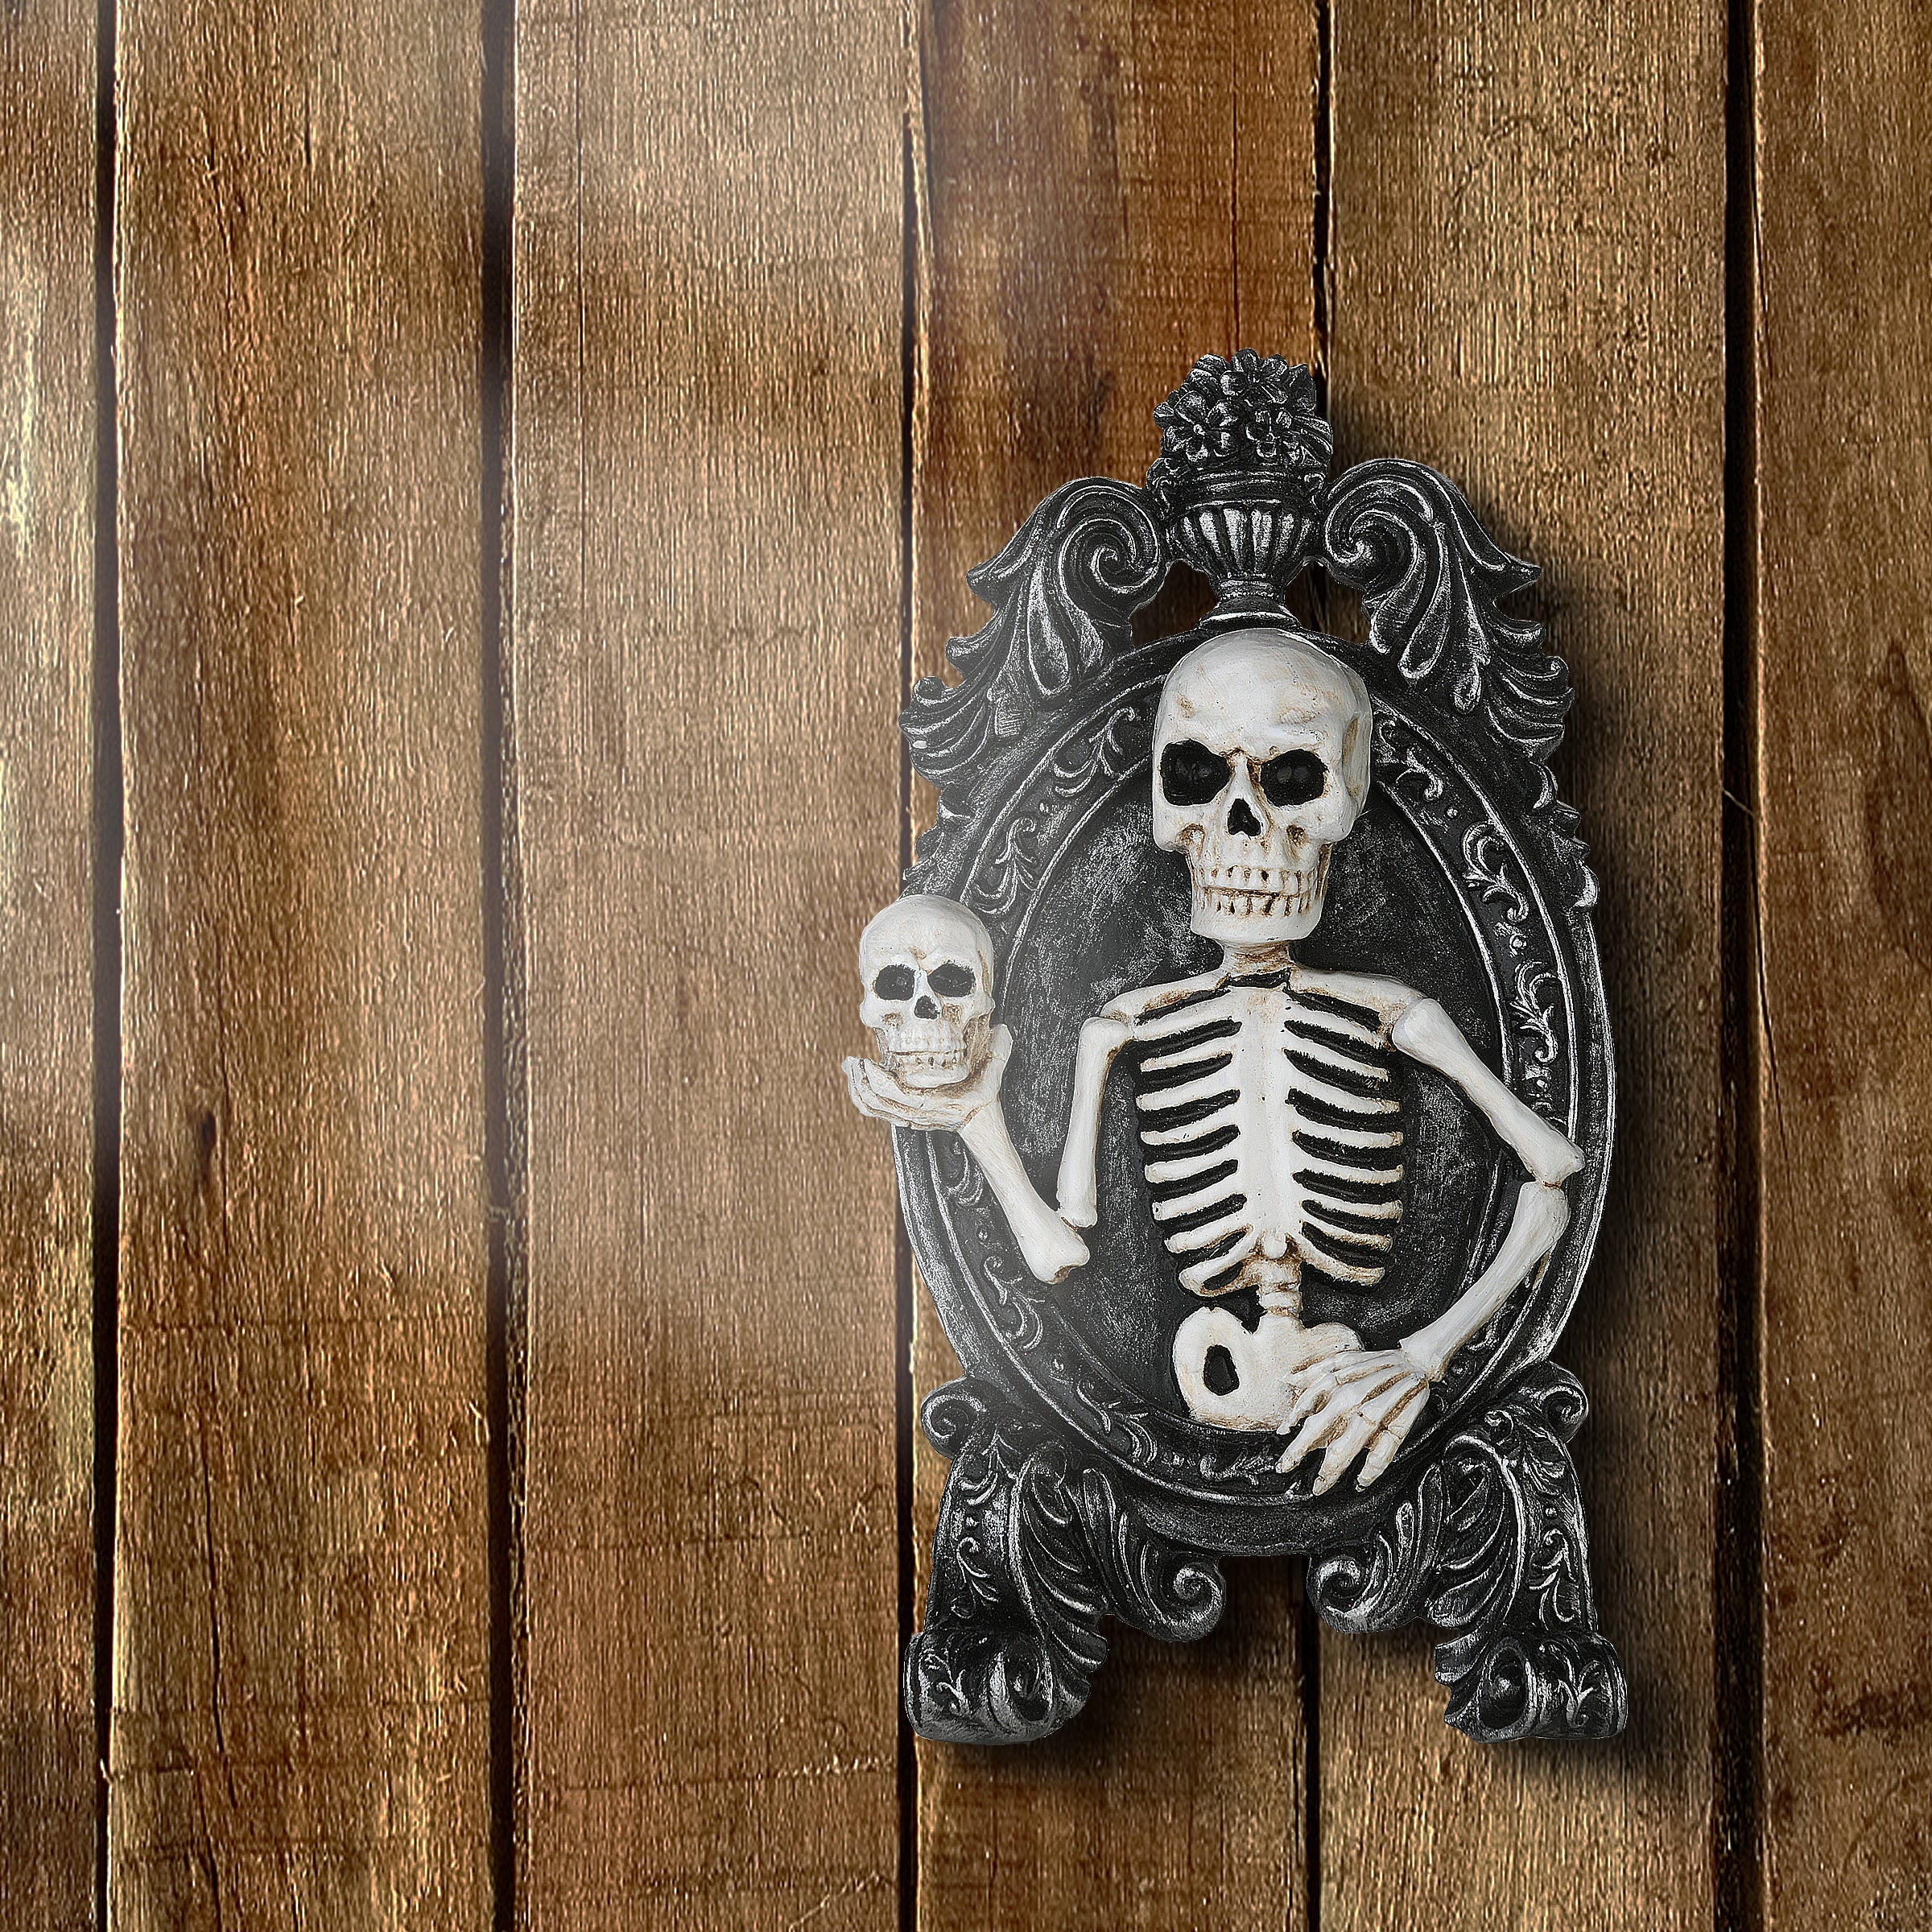 Halloween Skeleton Portrait Decoration, 10 Inches